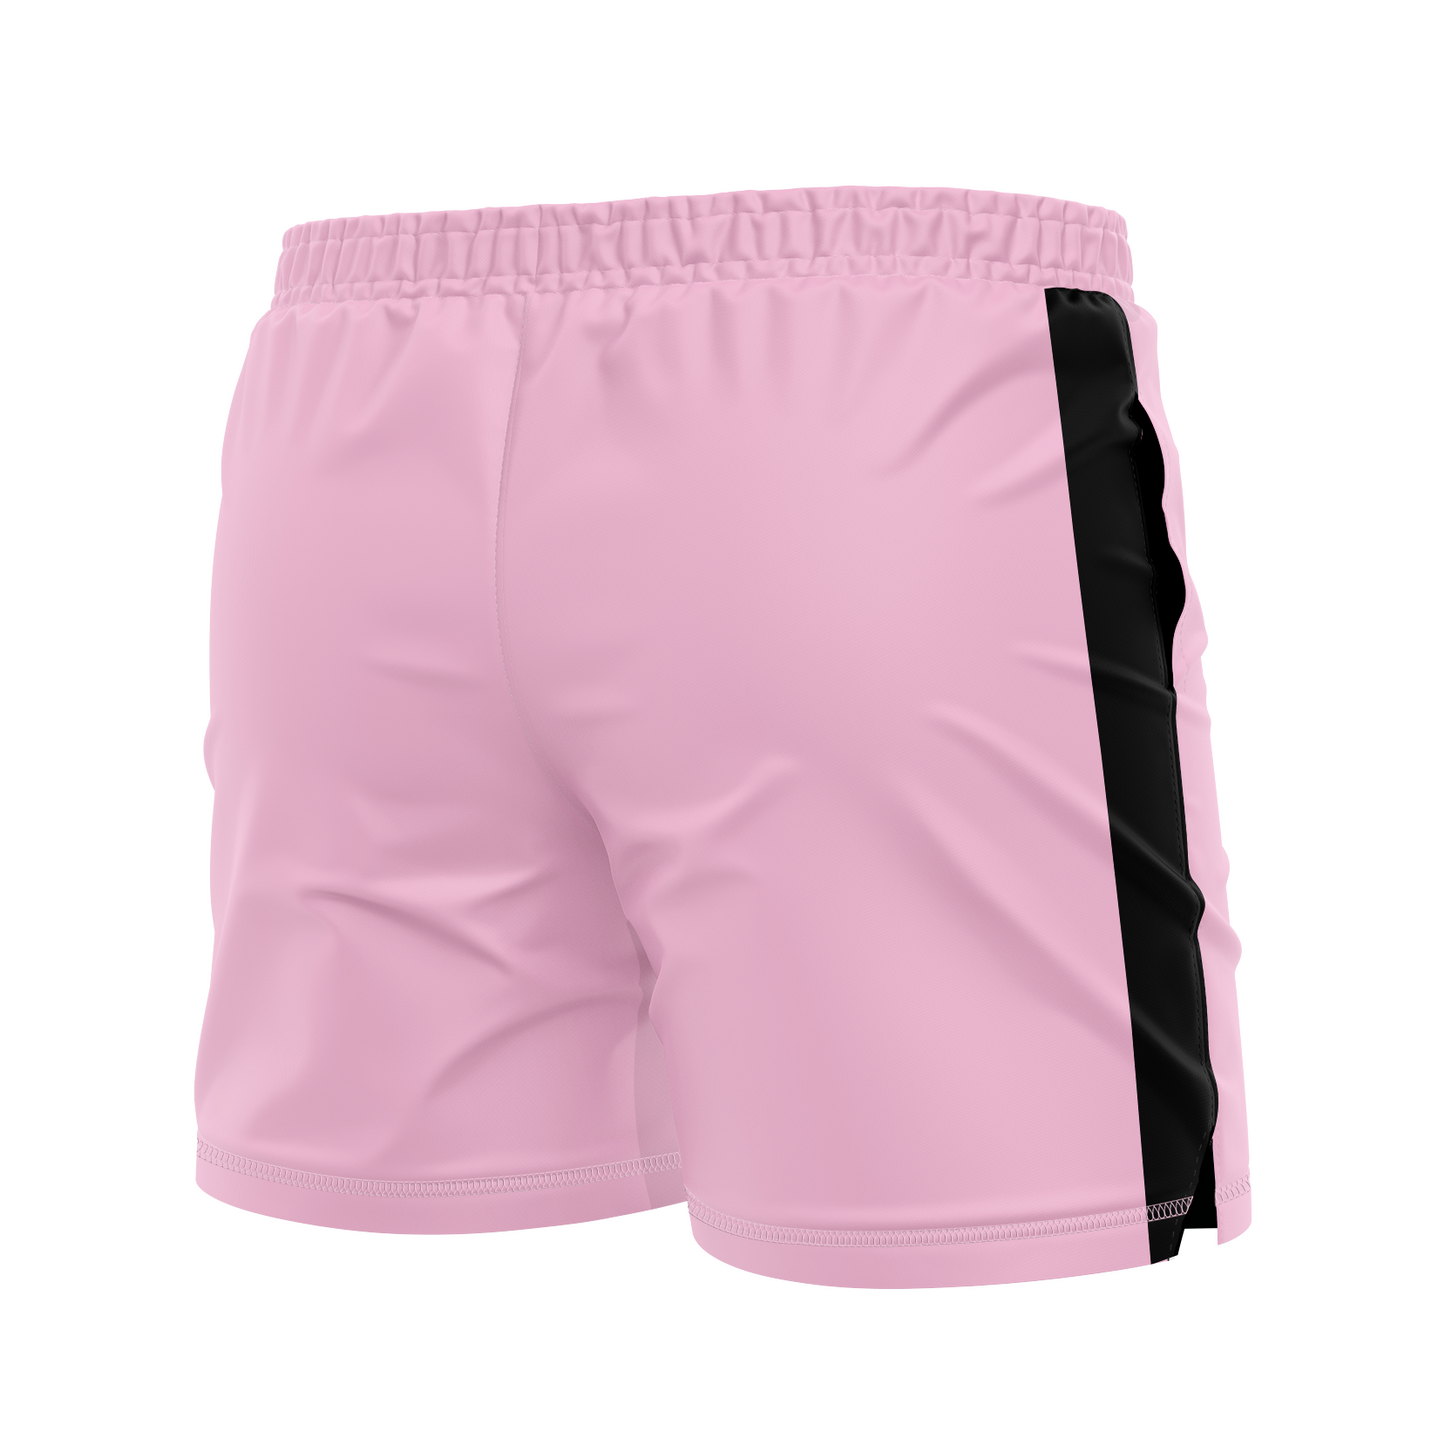 CCFC men's FC shorts Tango Vice, pink